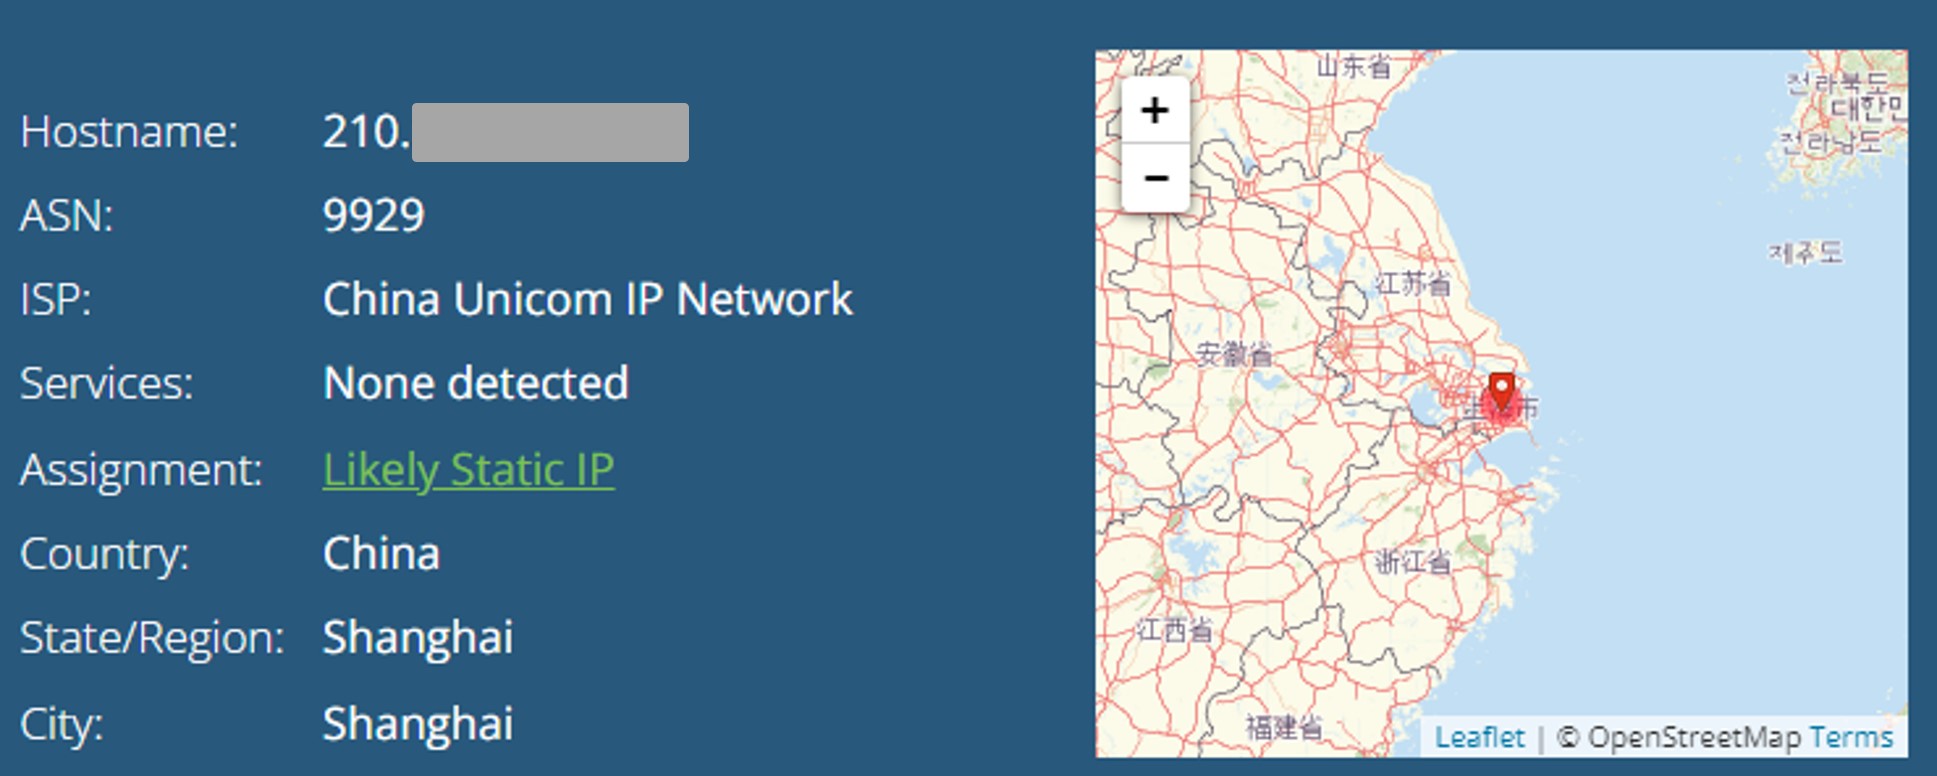 IP address in Shanghai City